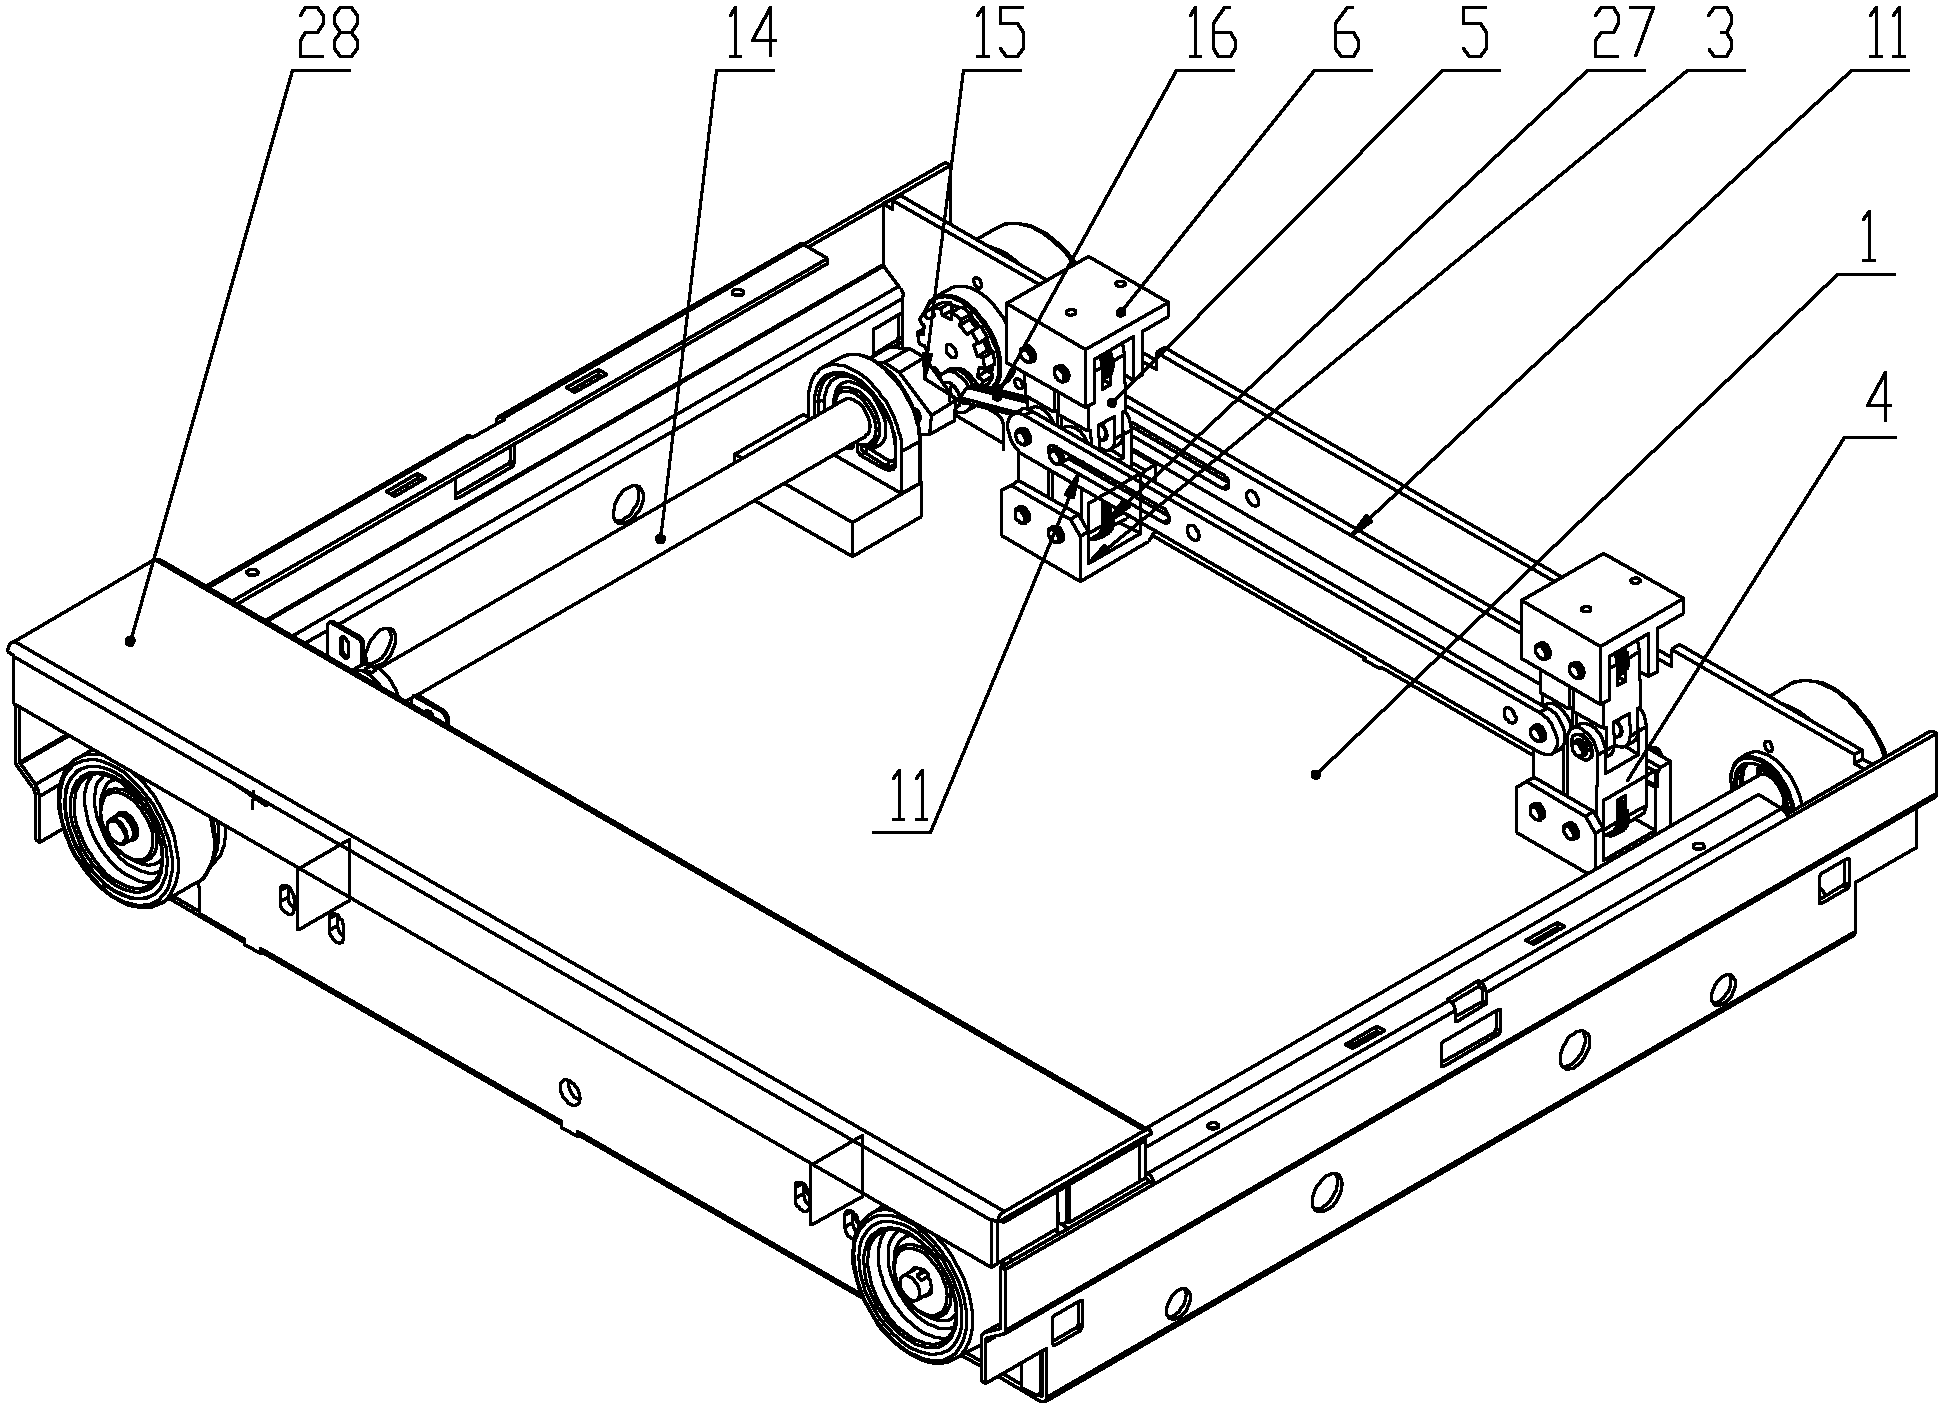 Lifting mechanism for shuttling tool